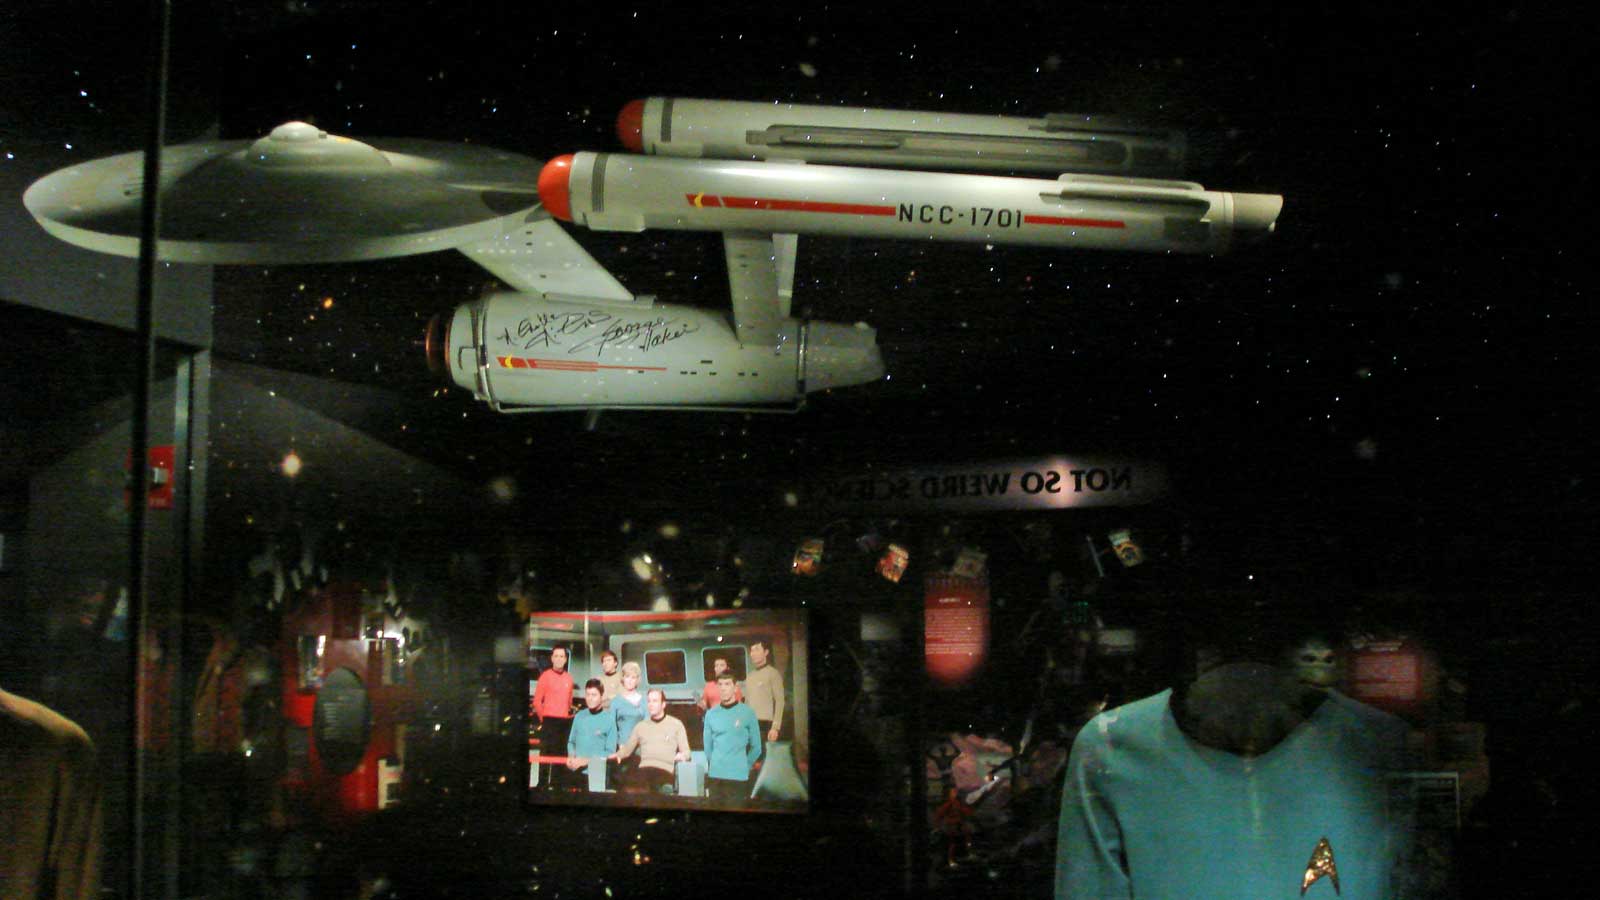 A large model of the Enterprise